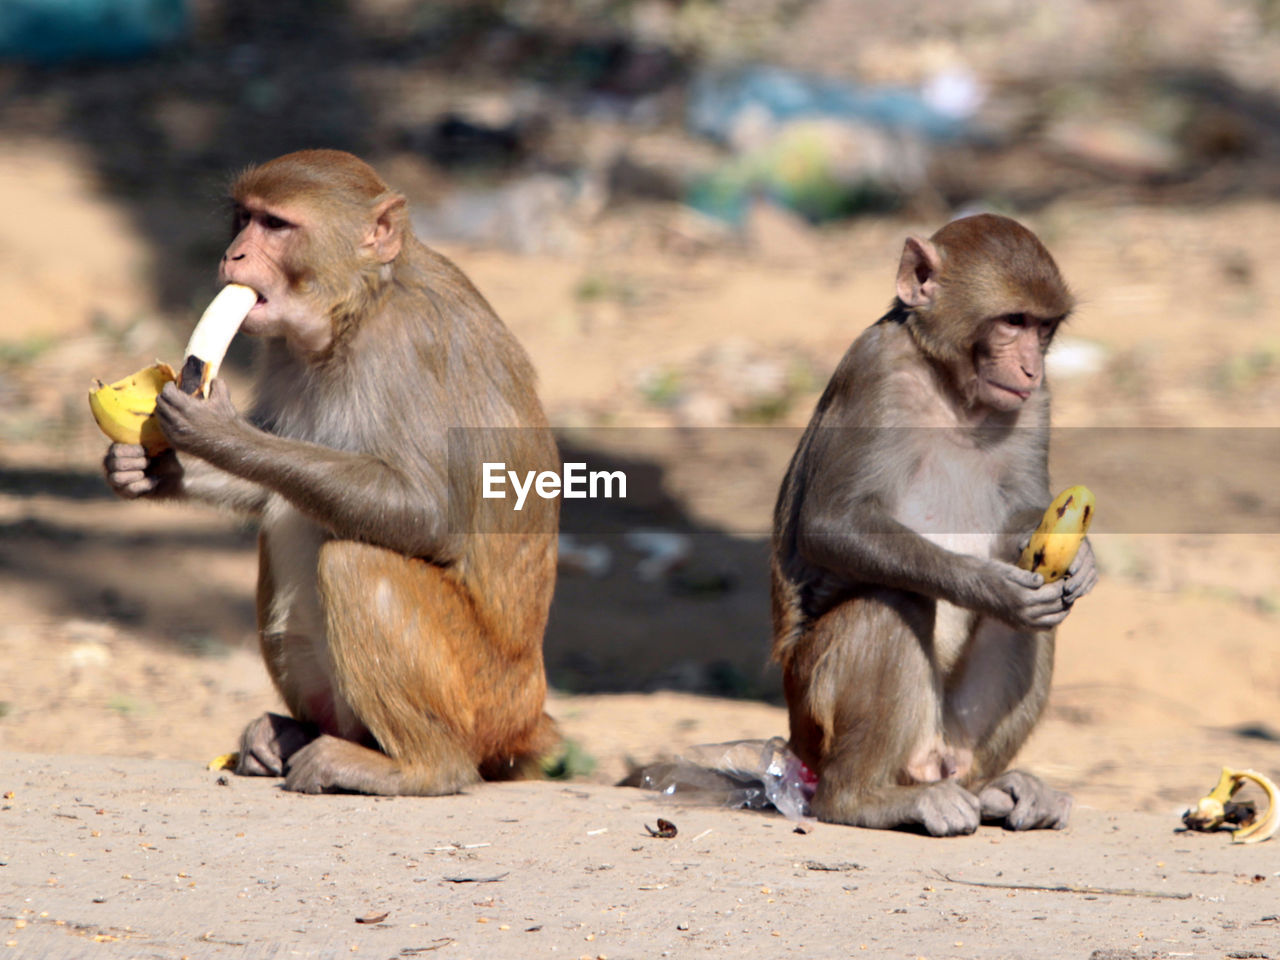 Monkeys eating food